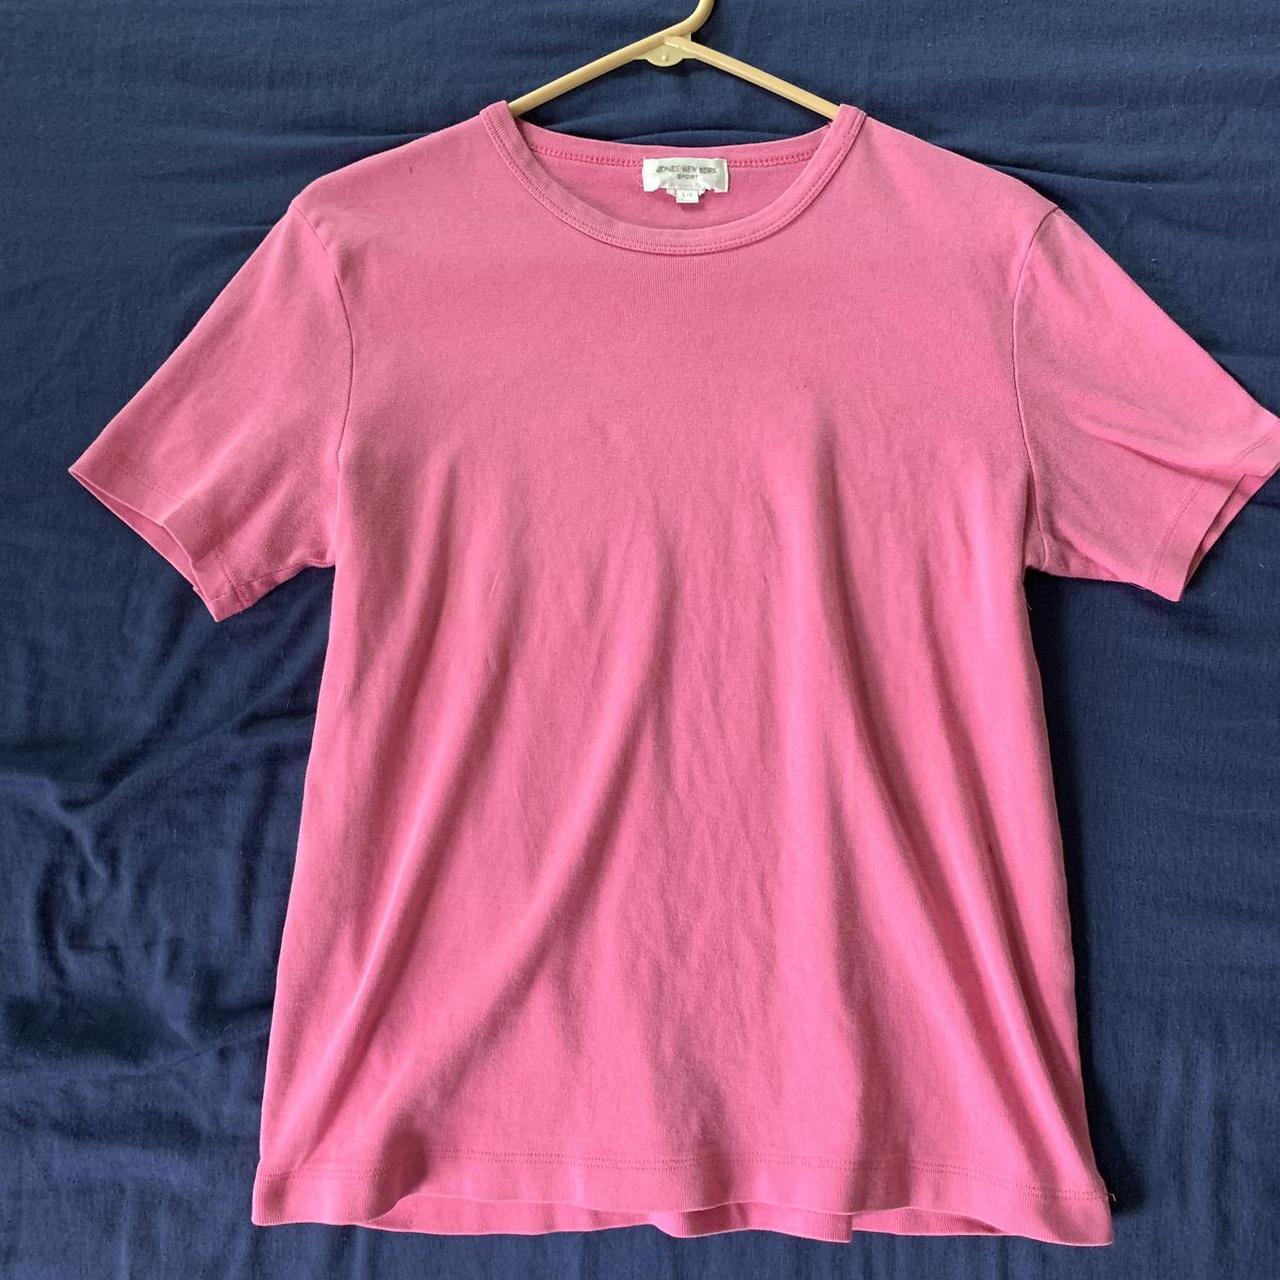 Pink Pastel | Shirt | Large Fit Like Medium Good... - Depop